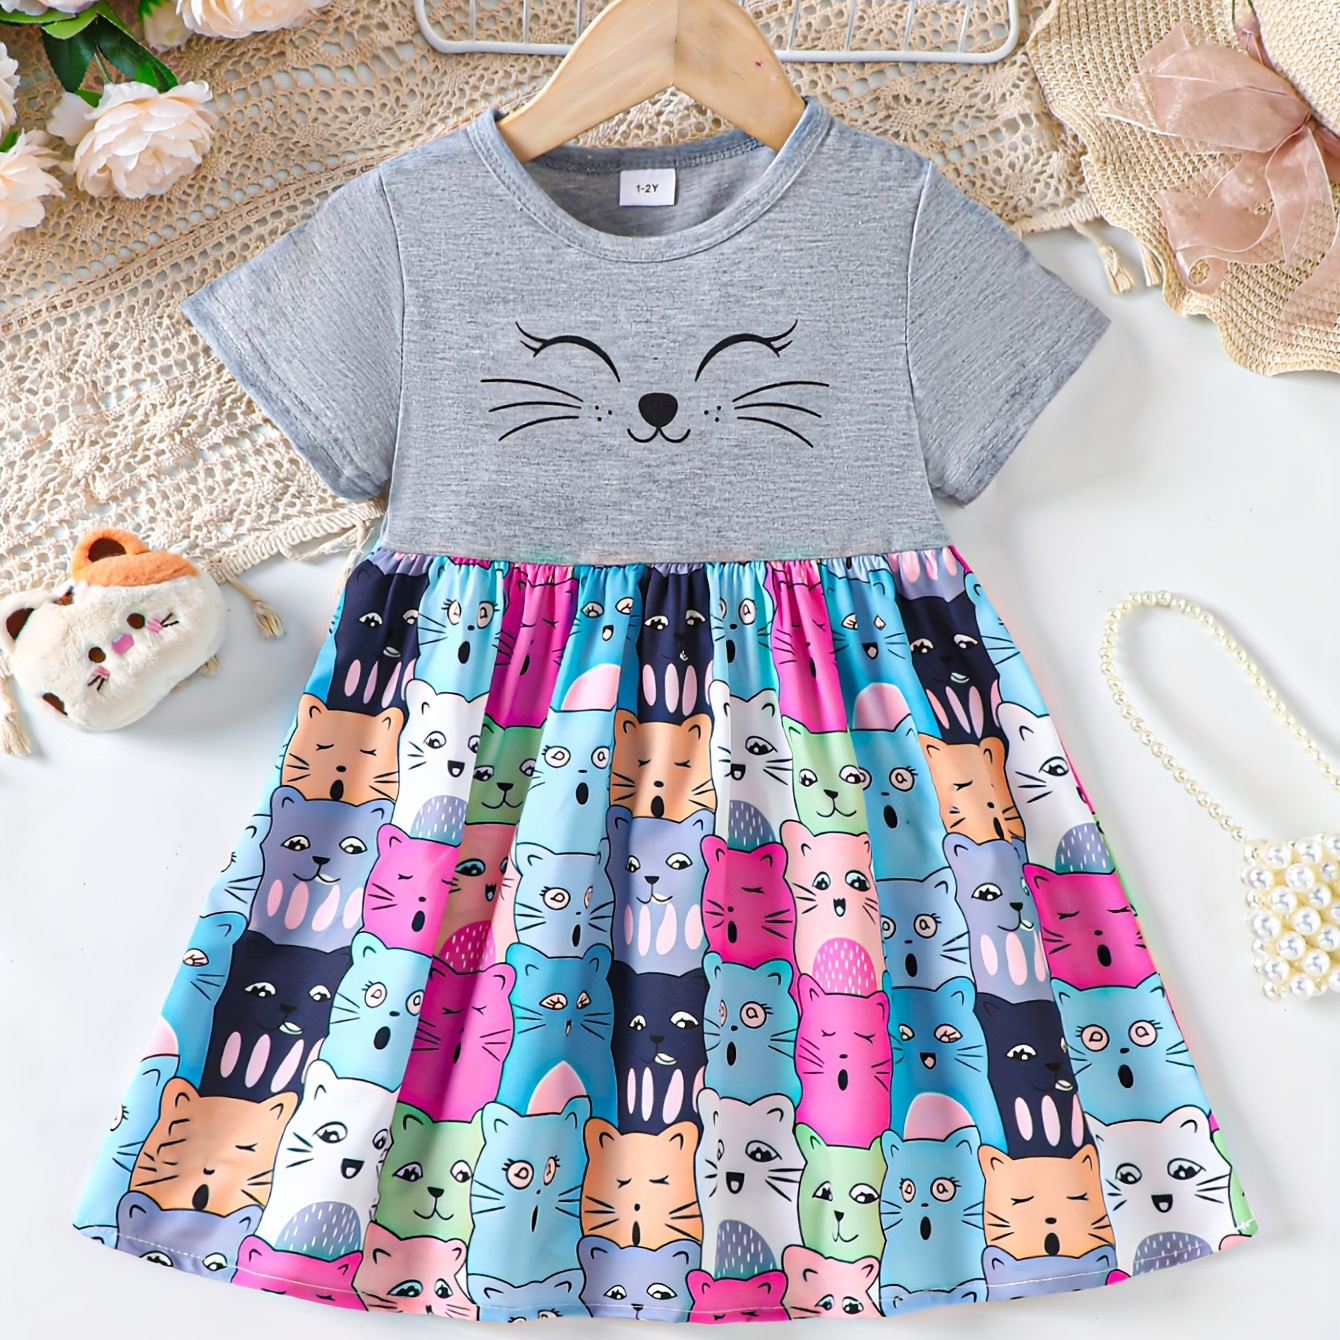 

Girl's Smiling Kitten Print A-line Dress, Casual Short Sleeve Swing Dress, Summer Gift